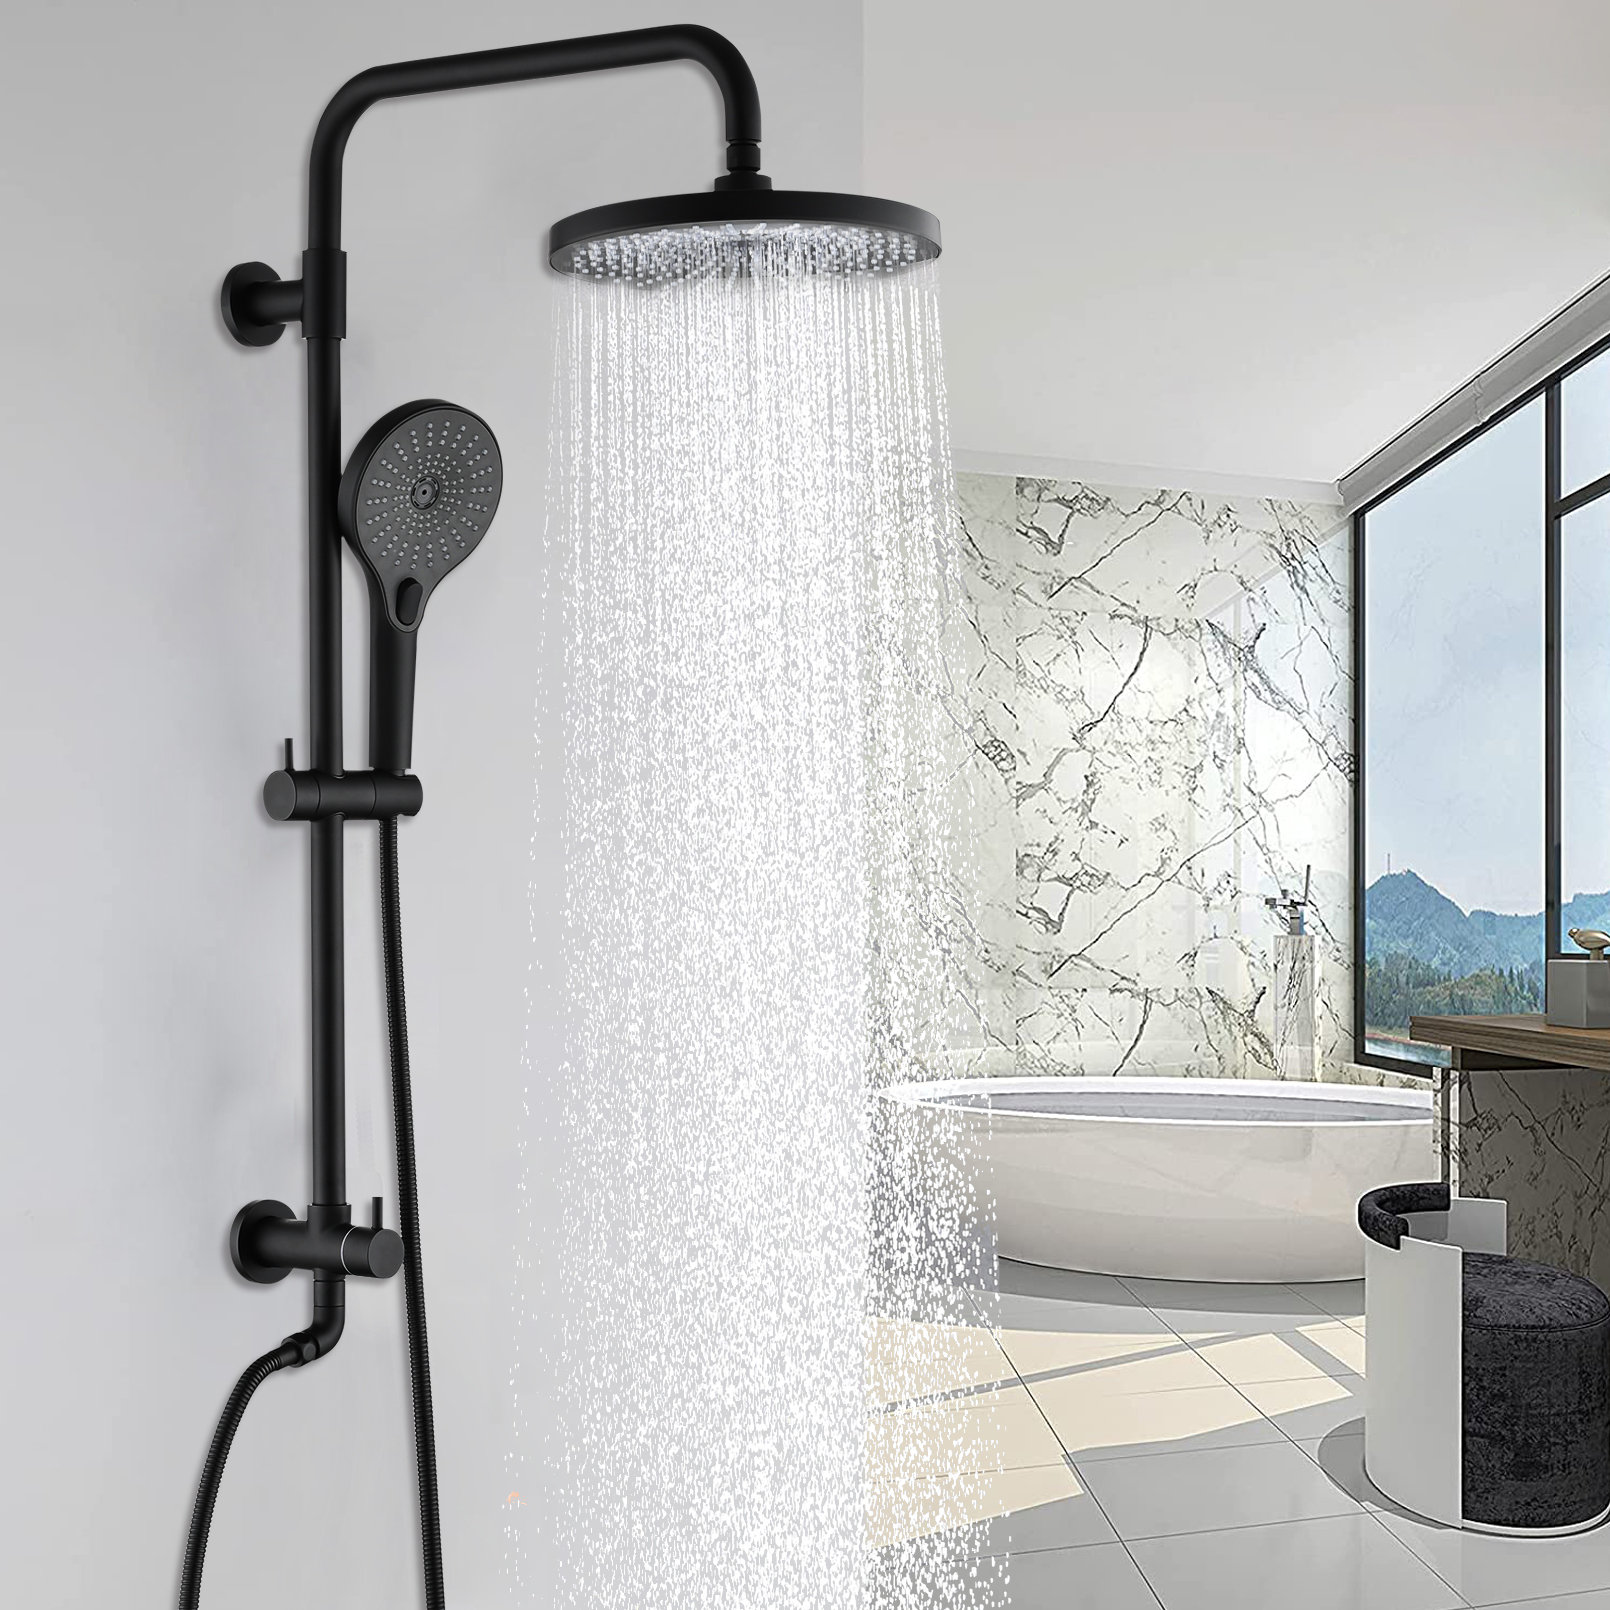 Dornberg Bath Rain Shower Head with Built-in Shower System in